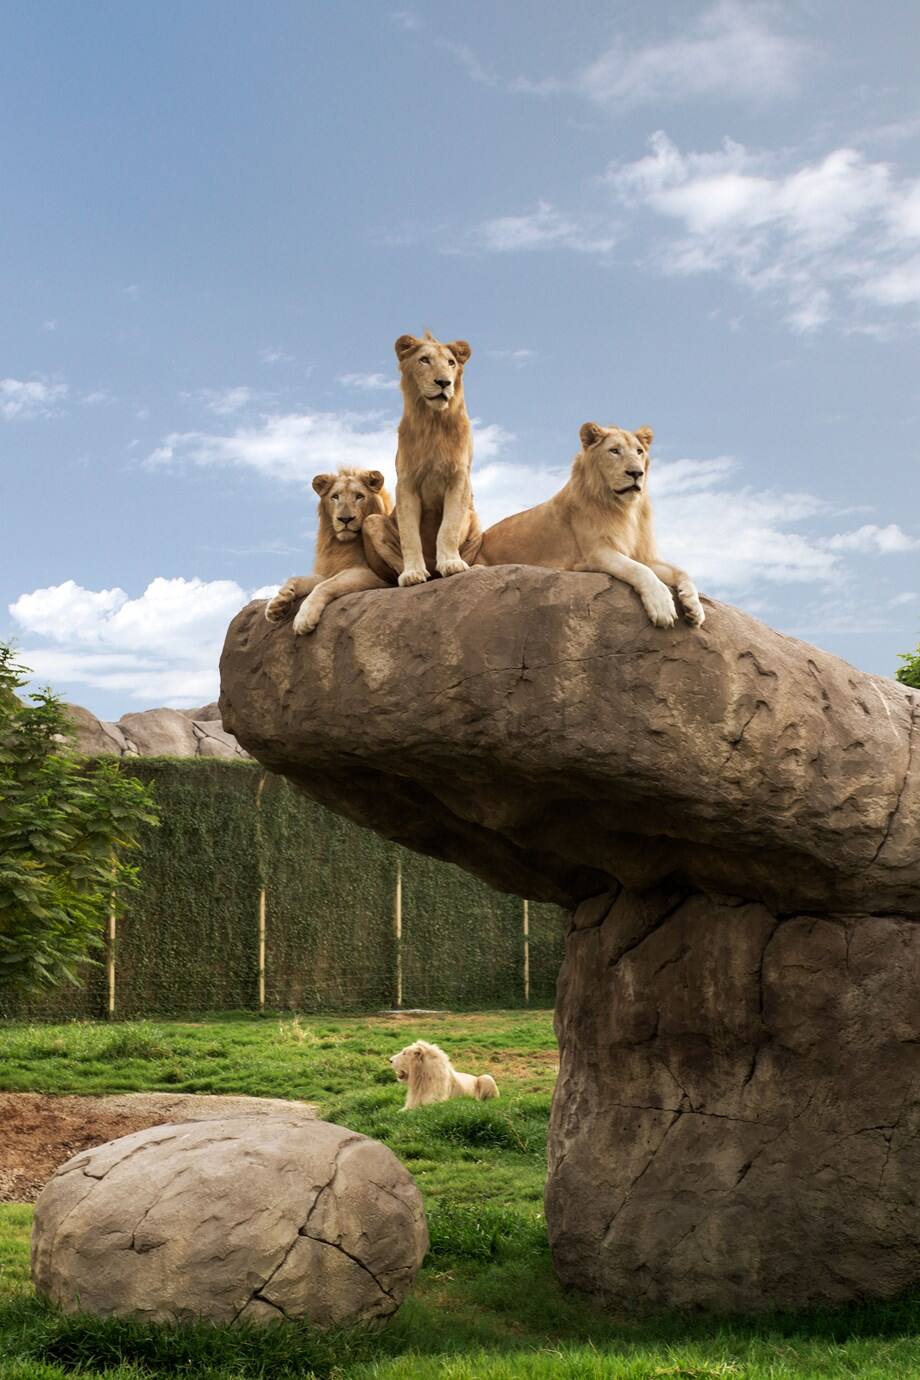 Lions at Dubai Safari Park